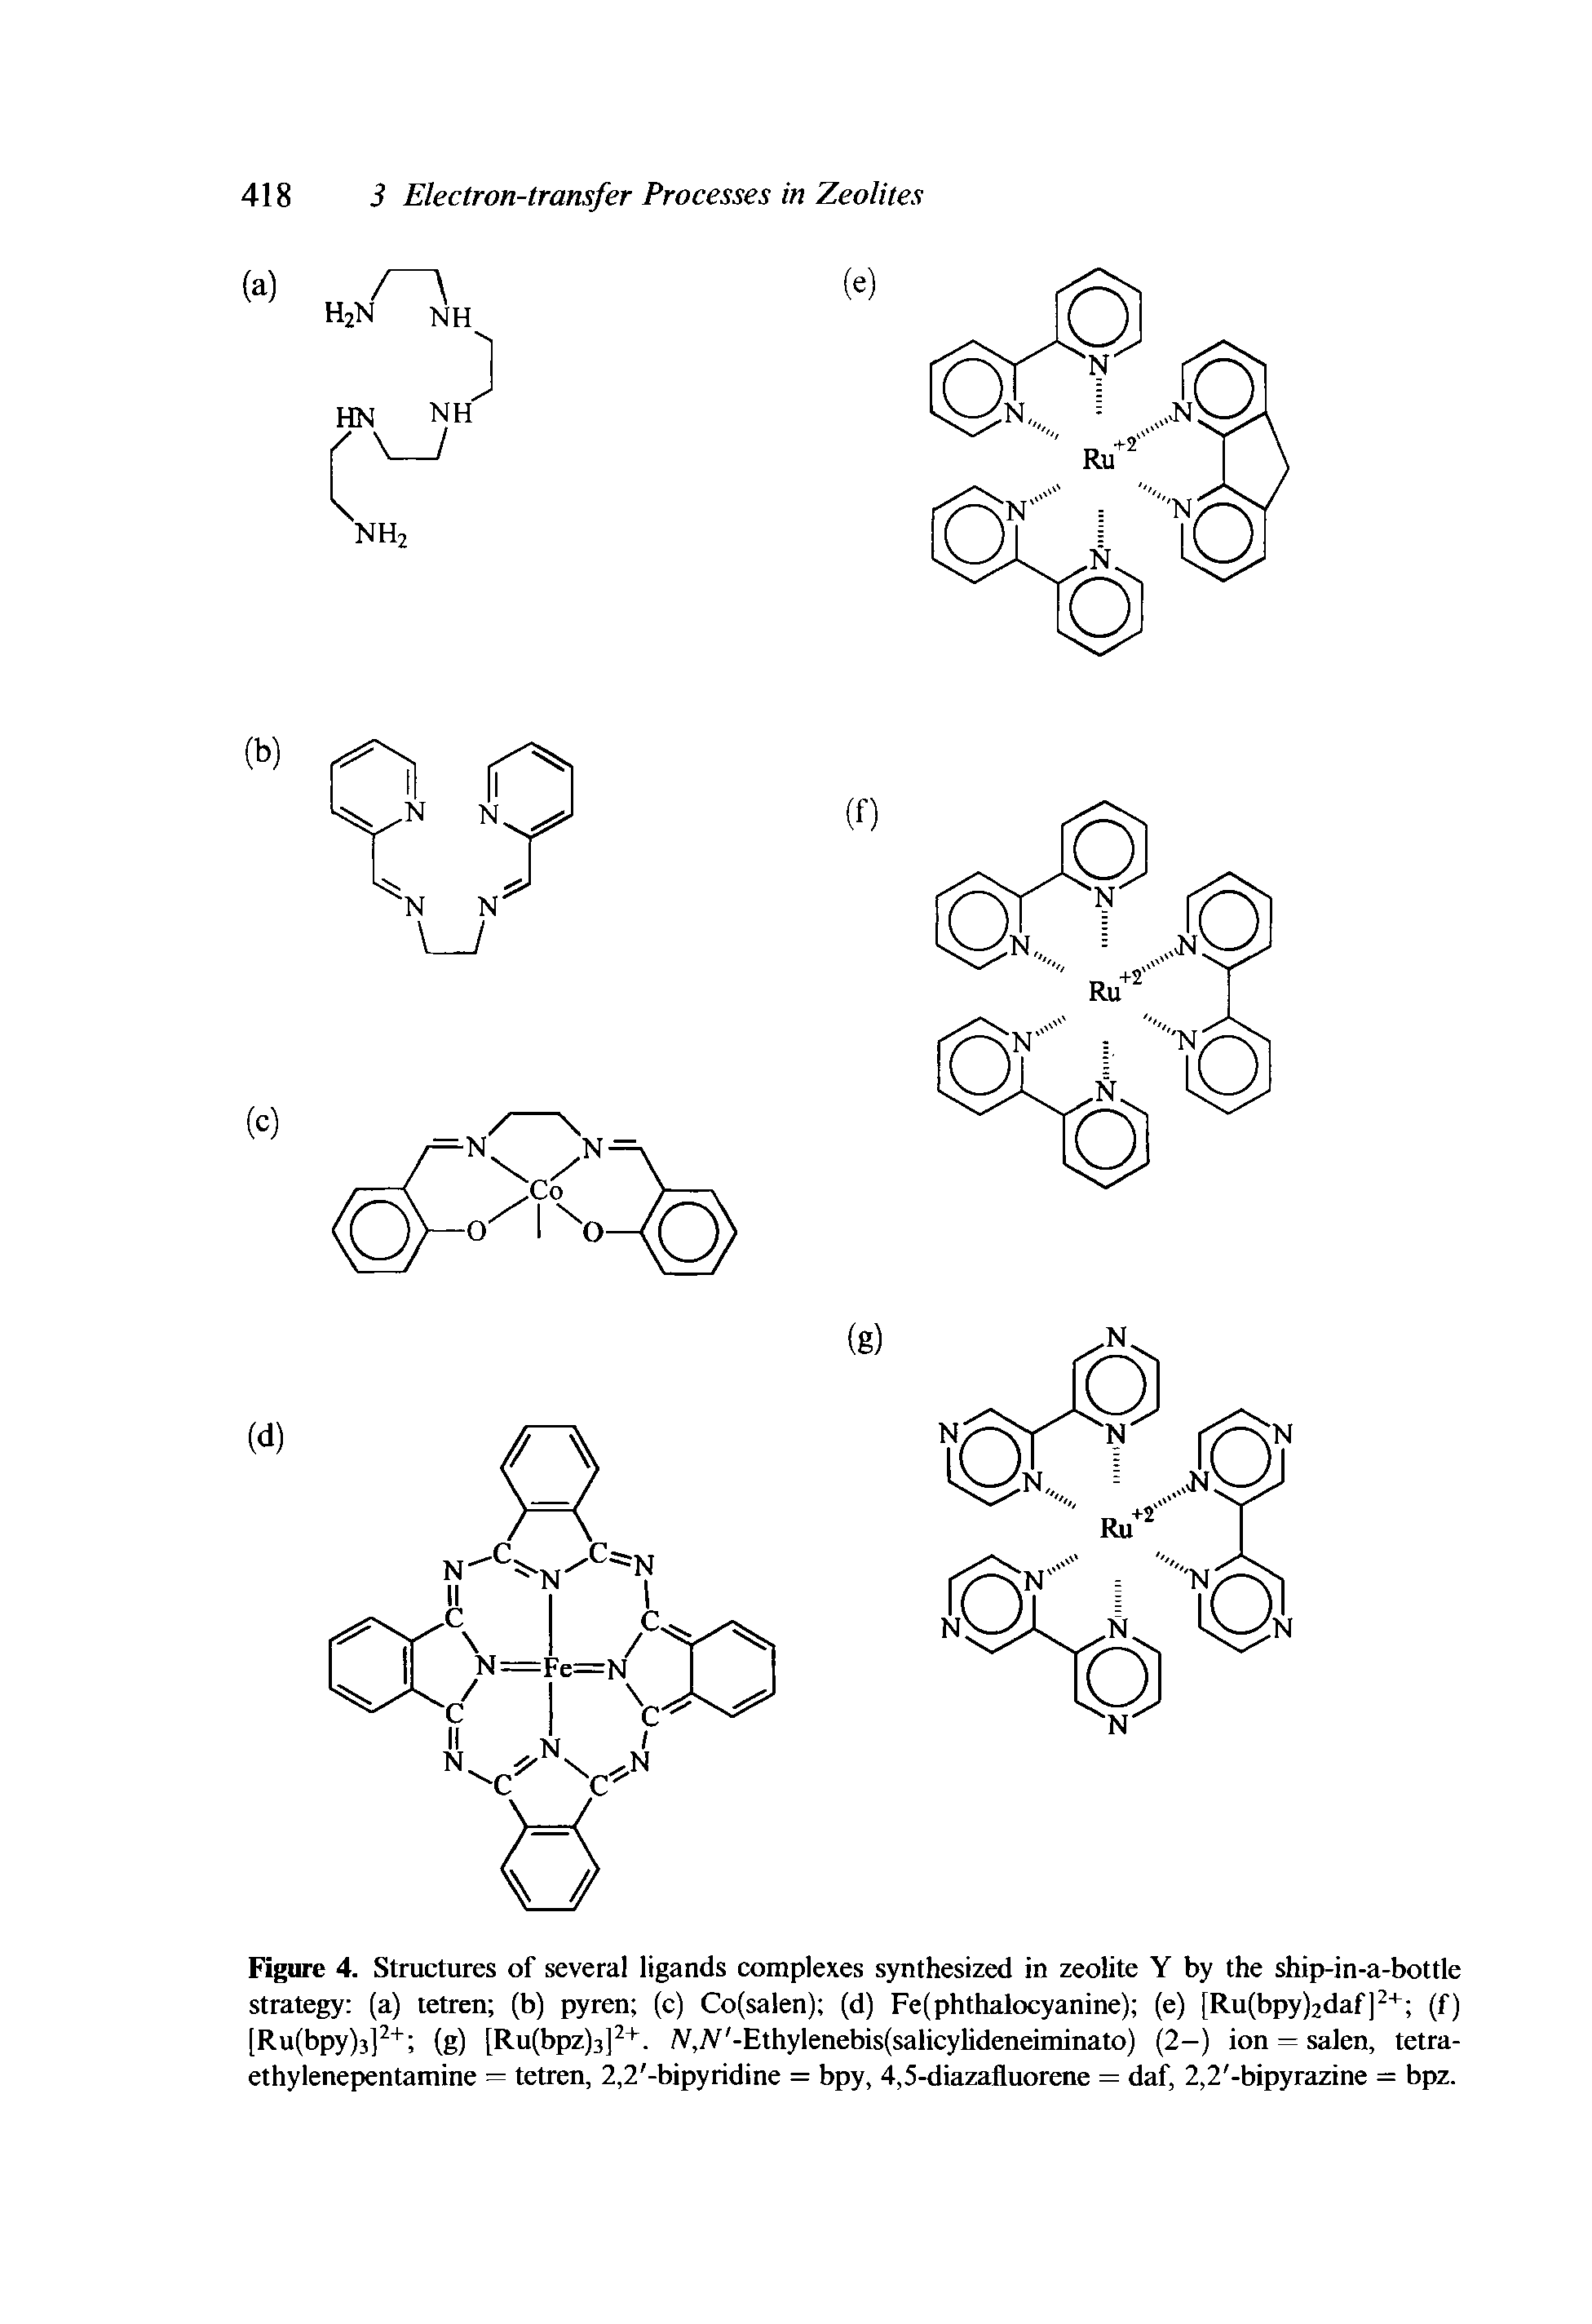 Figure 4. Structures of several ligands eomplexes synthesized in zeolite Y by the ship-in-a-bottle strategy (a) tetren (b) pyren (c) Co(salen) (d) Fe(phthalocyanine) (e) [Ru(bpy)2daf] + (f) [Ru(bpy)3] + (g) [Ru(bpz)3] +. Y,iV -Ethylenebis(salicylideneiminato) (2-) ion = salen, tetra-ethylenepentamine = tetren, 2,2 -bipyridine = bpy, 4,5-diazafluorene = daf, 2,2 -bipyrazine = bpz.